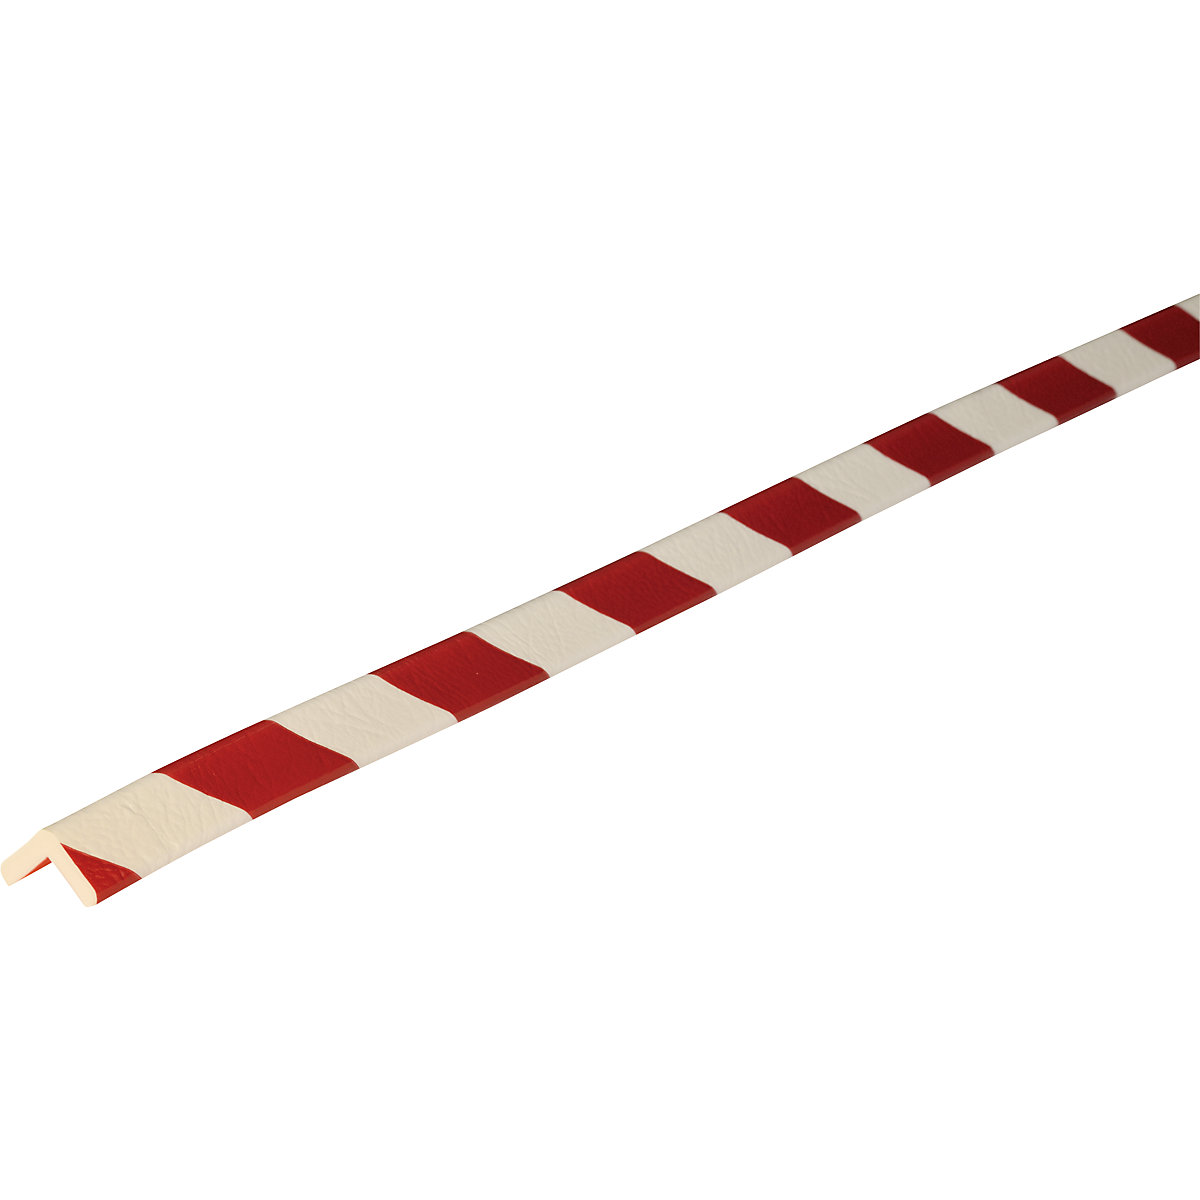 Knuffi®-hoekbescherming – SHG, type E, afmetingen individueel, per str. m, rood/wit-9